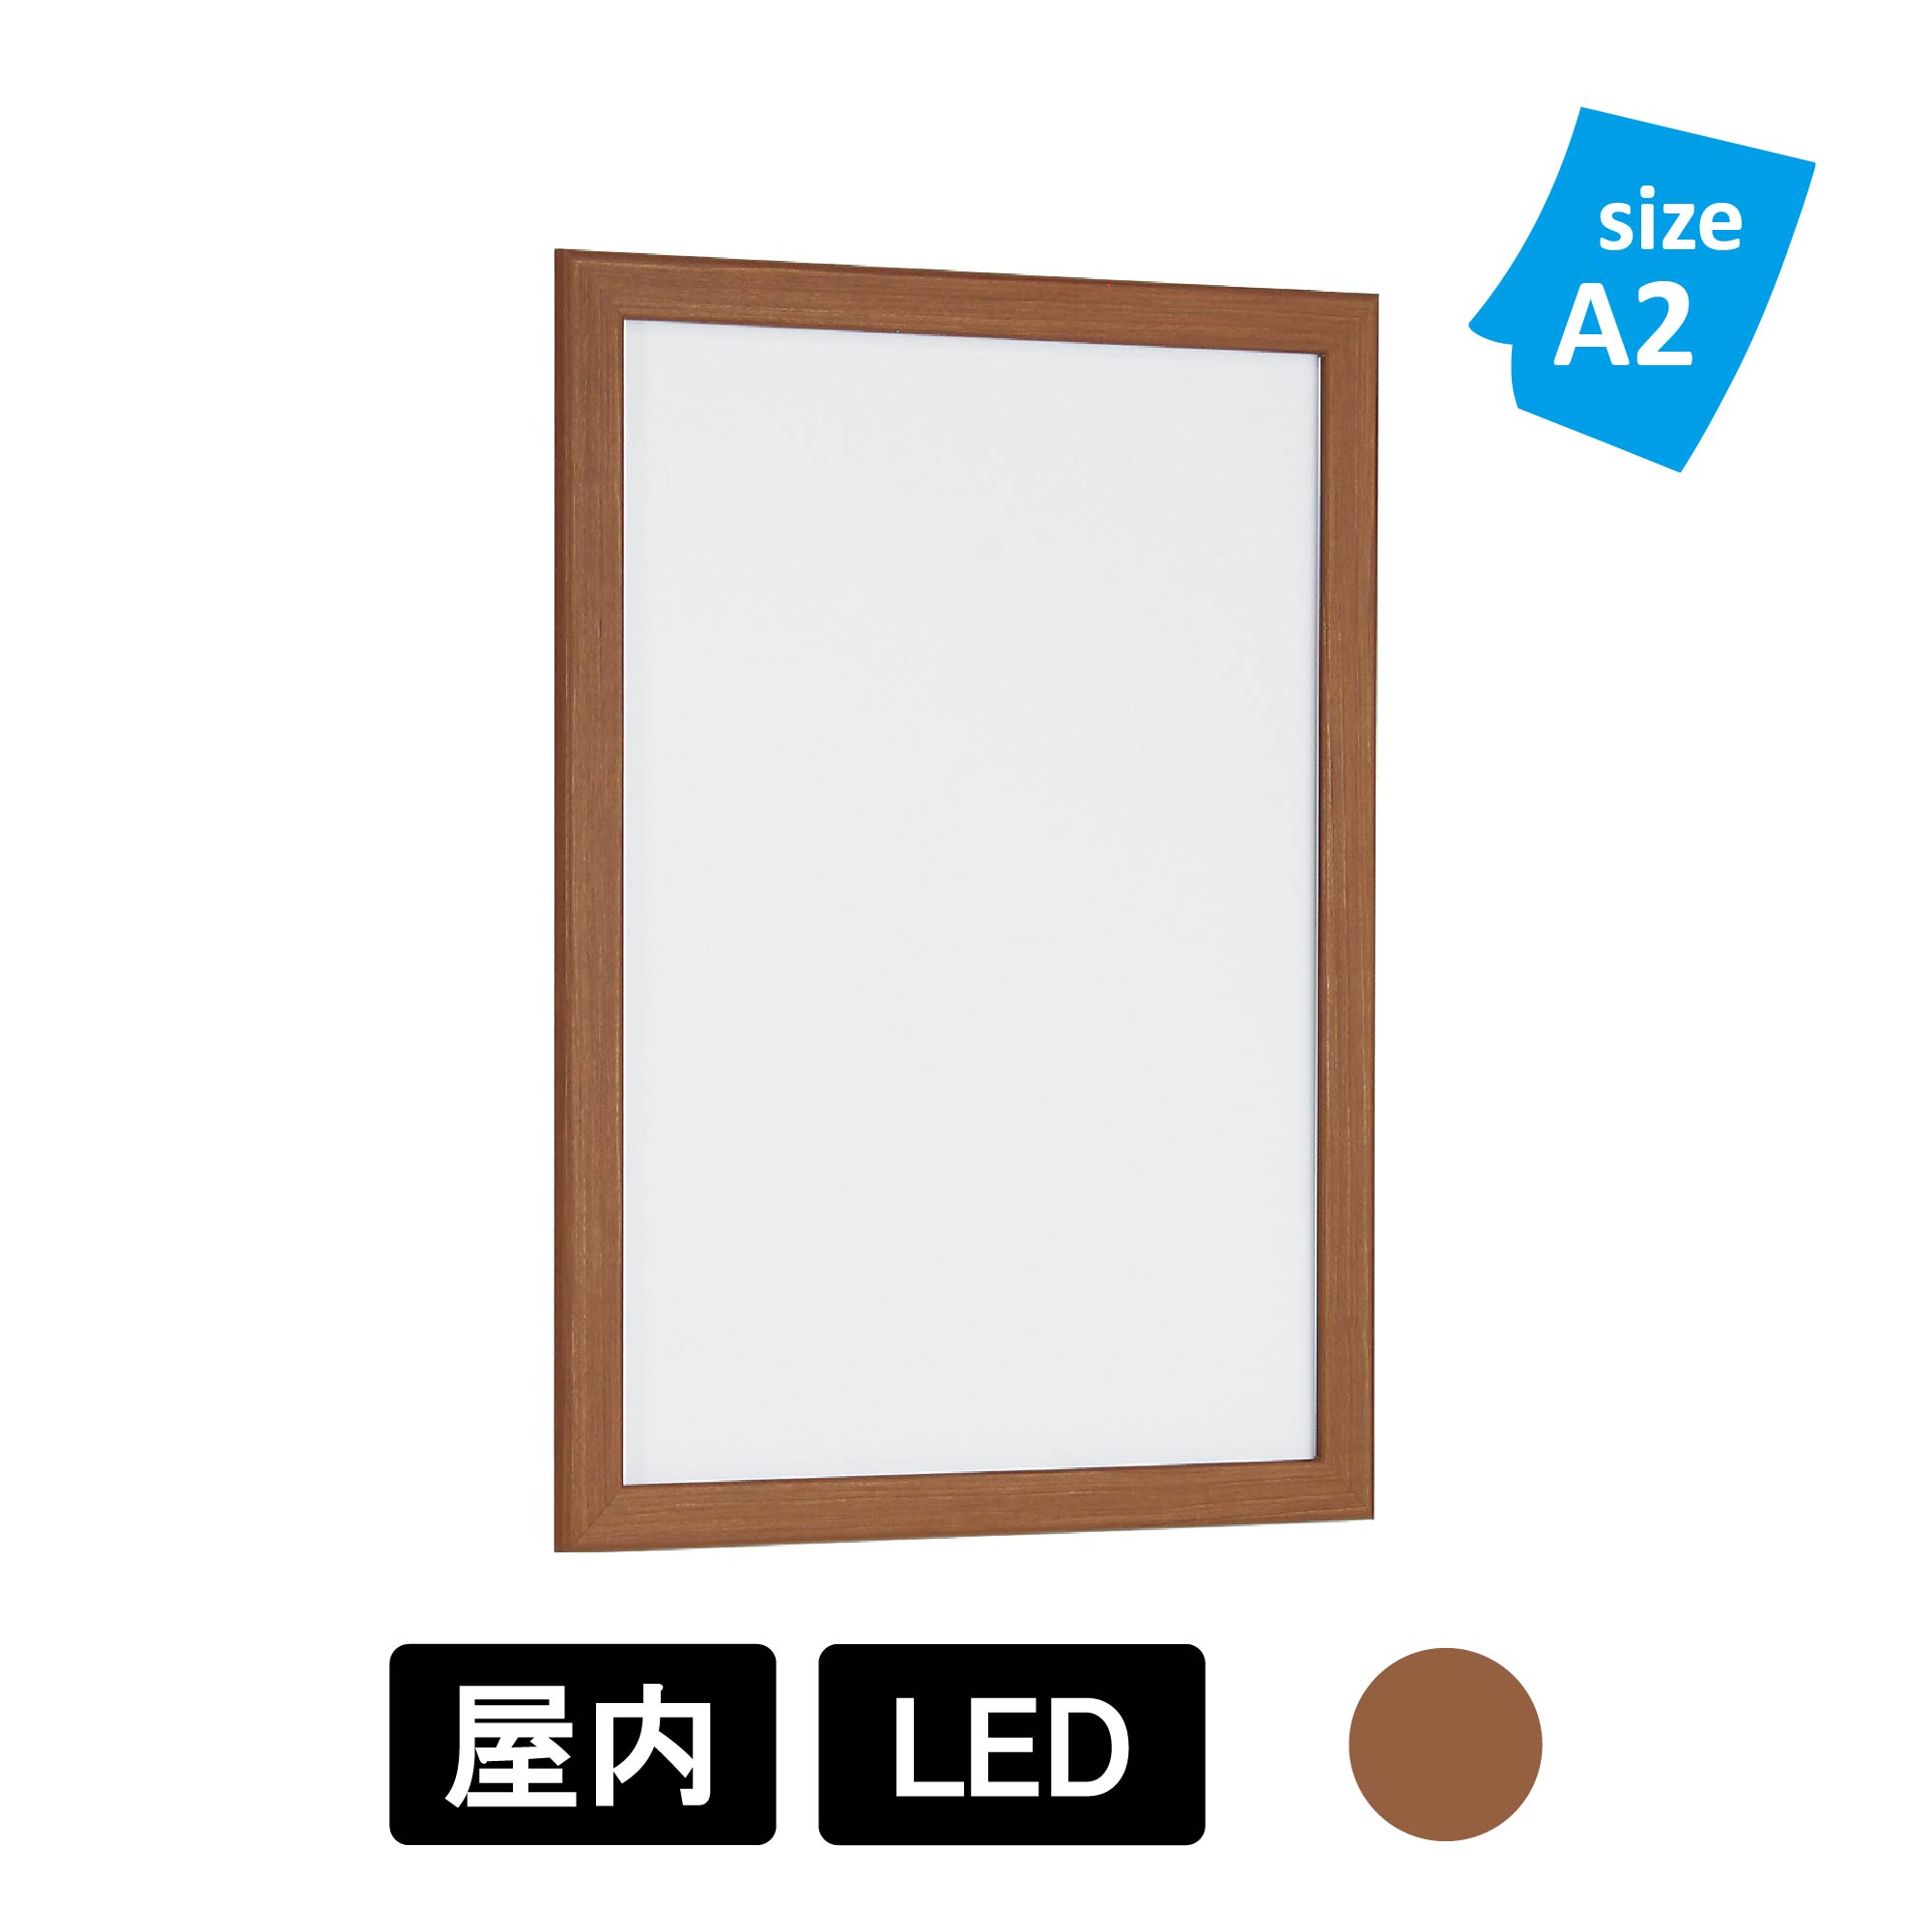 LED内照パネル FE934 BR 木目ブラウン A2(FE934 BR) ポスターフレーム LED,タテヨコ設置可能,前面四方開閉,壁付け,スタンド,薄型,スリム  看板の激安通販ならサインウェブ